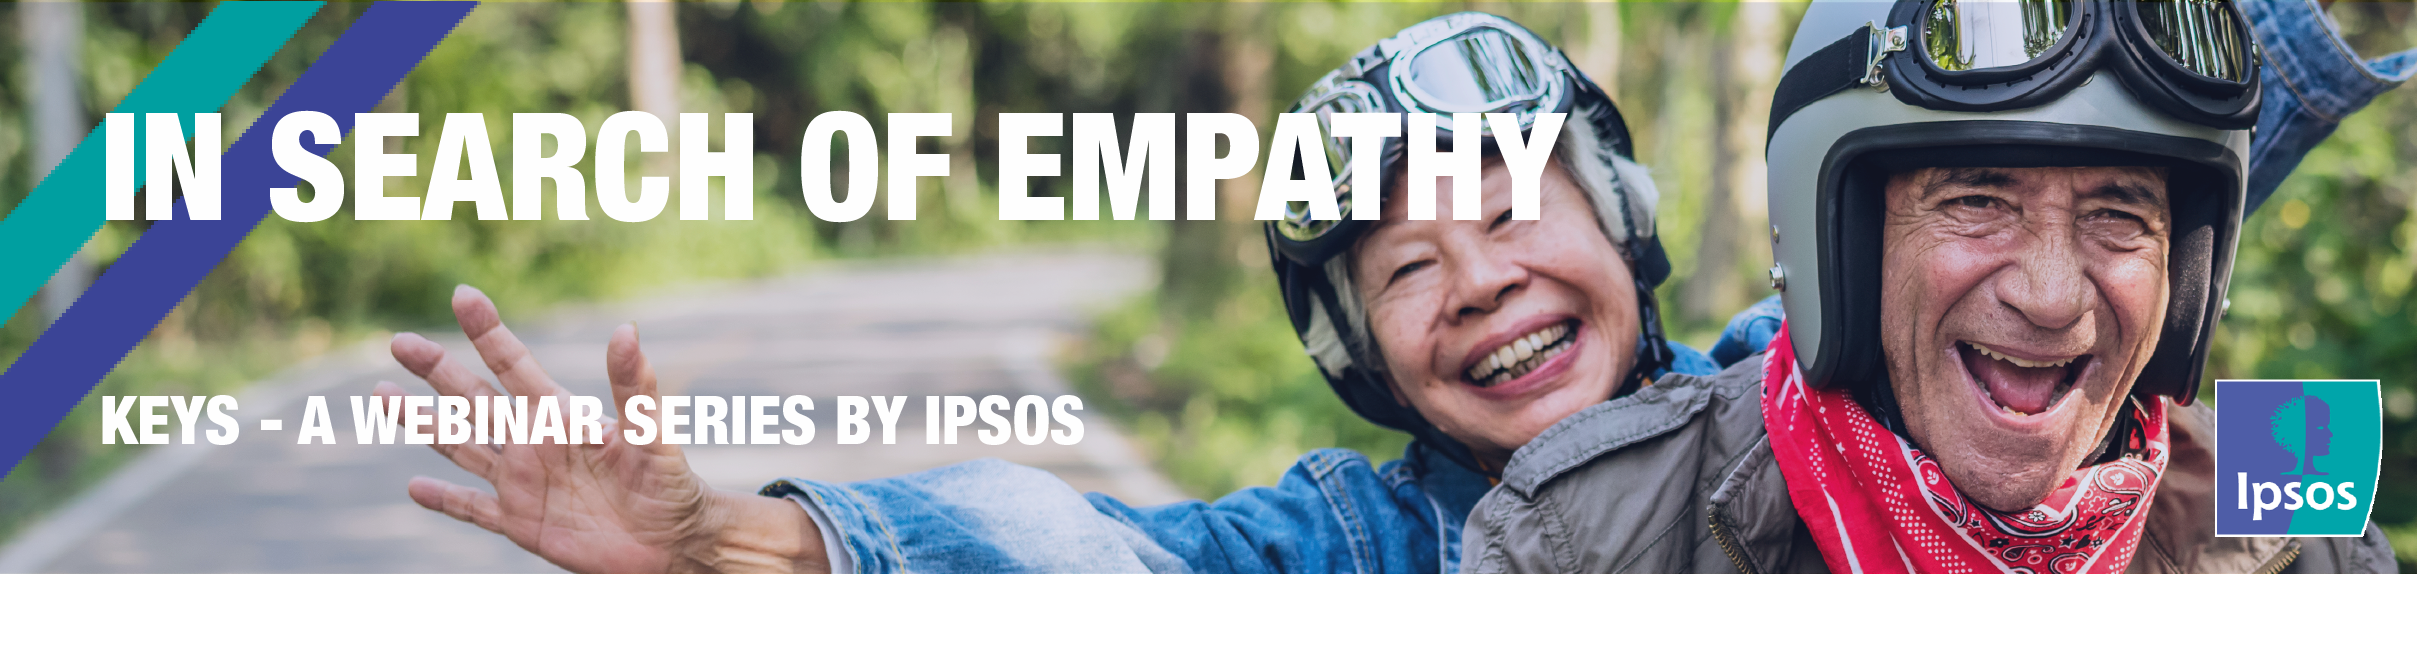 In search of empathy - Keys webinar | Ipsos